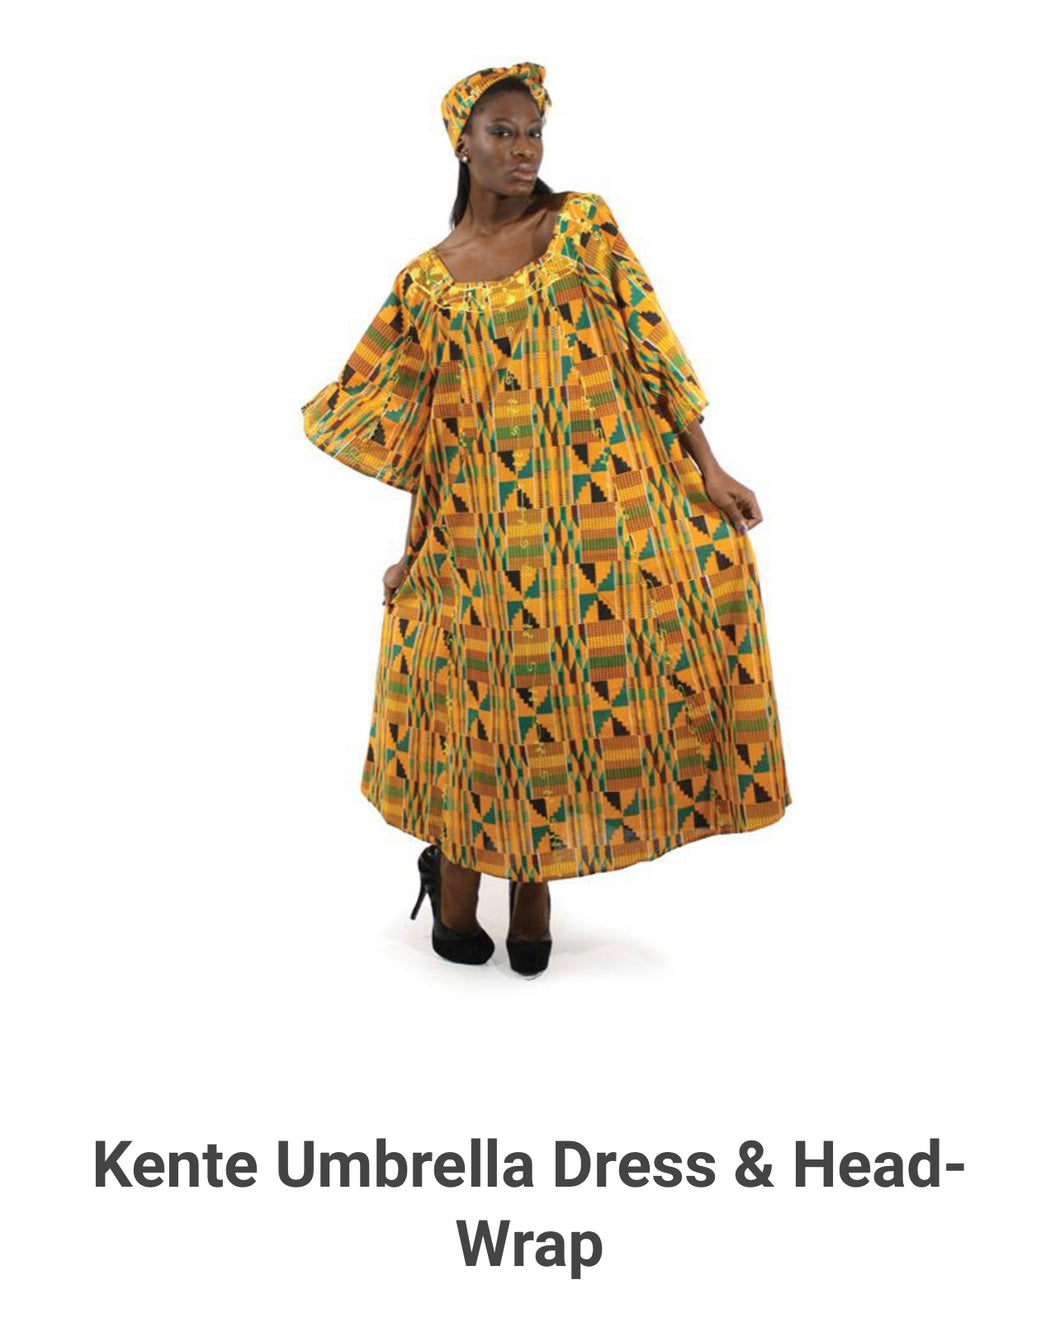 Kente Umbrella Dress & Head-Wrap